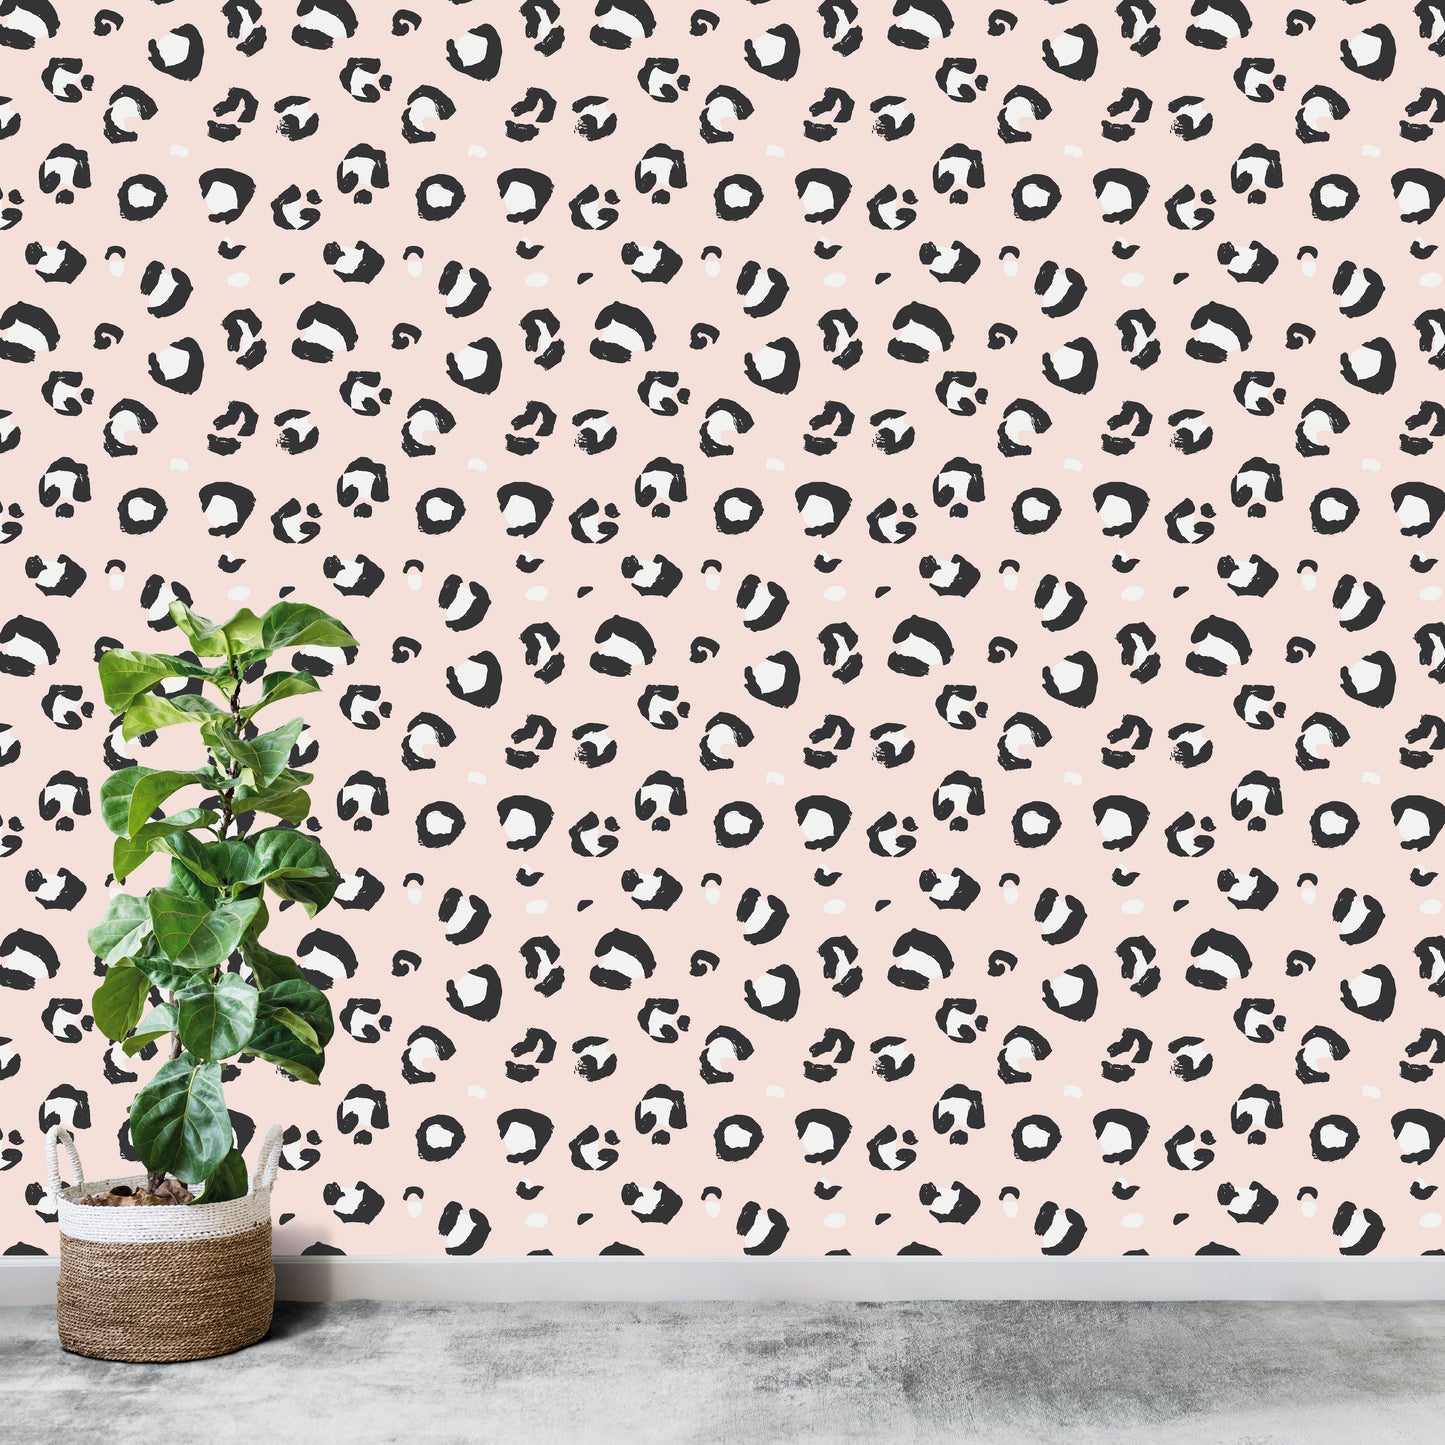 Animal Print Wallpaper Leopard Jaguar Spots Black White Silver   Amazoncouk DIY  Tools